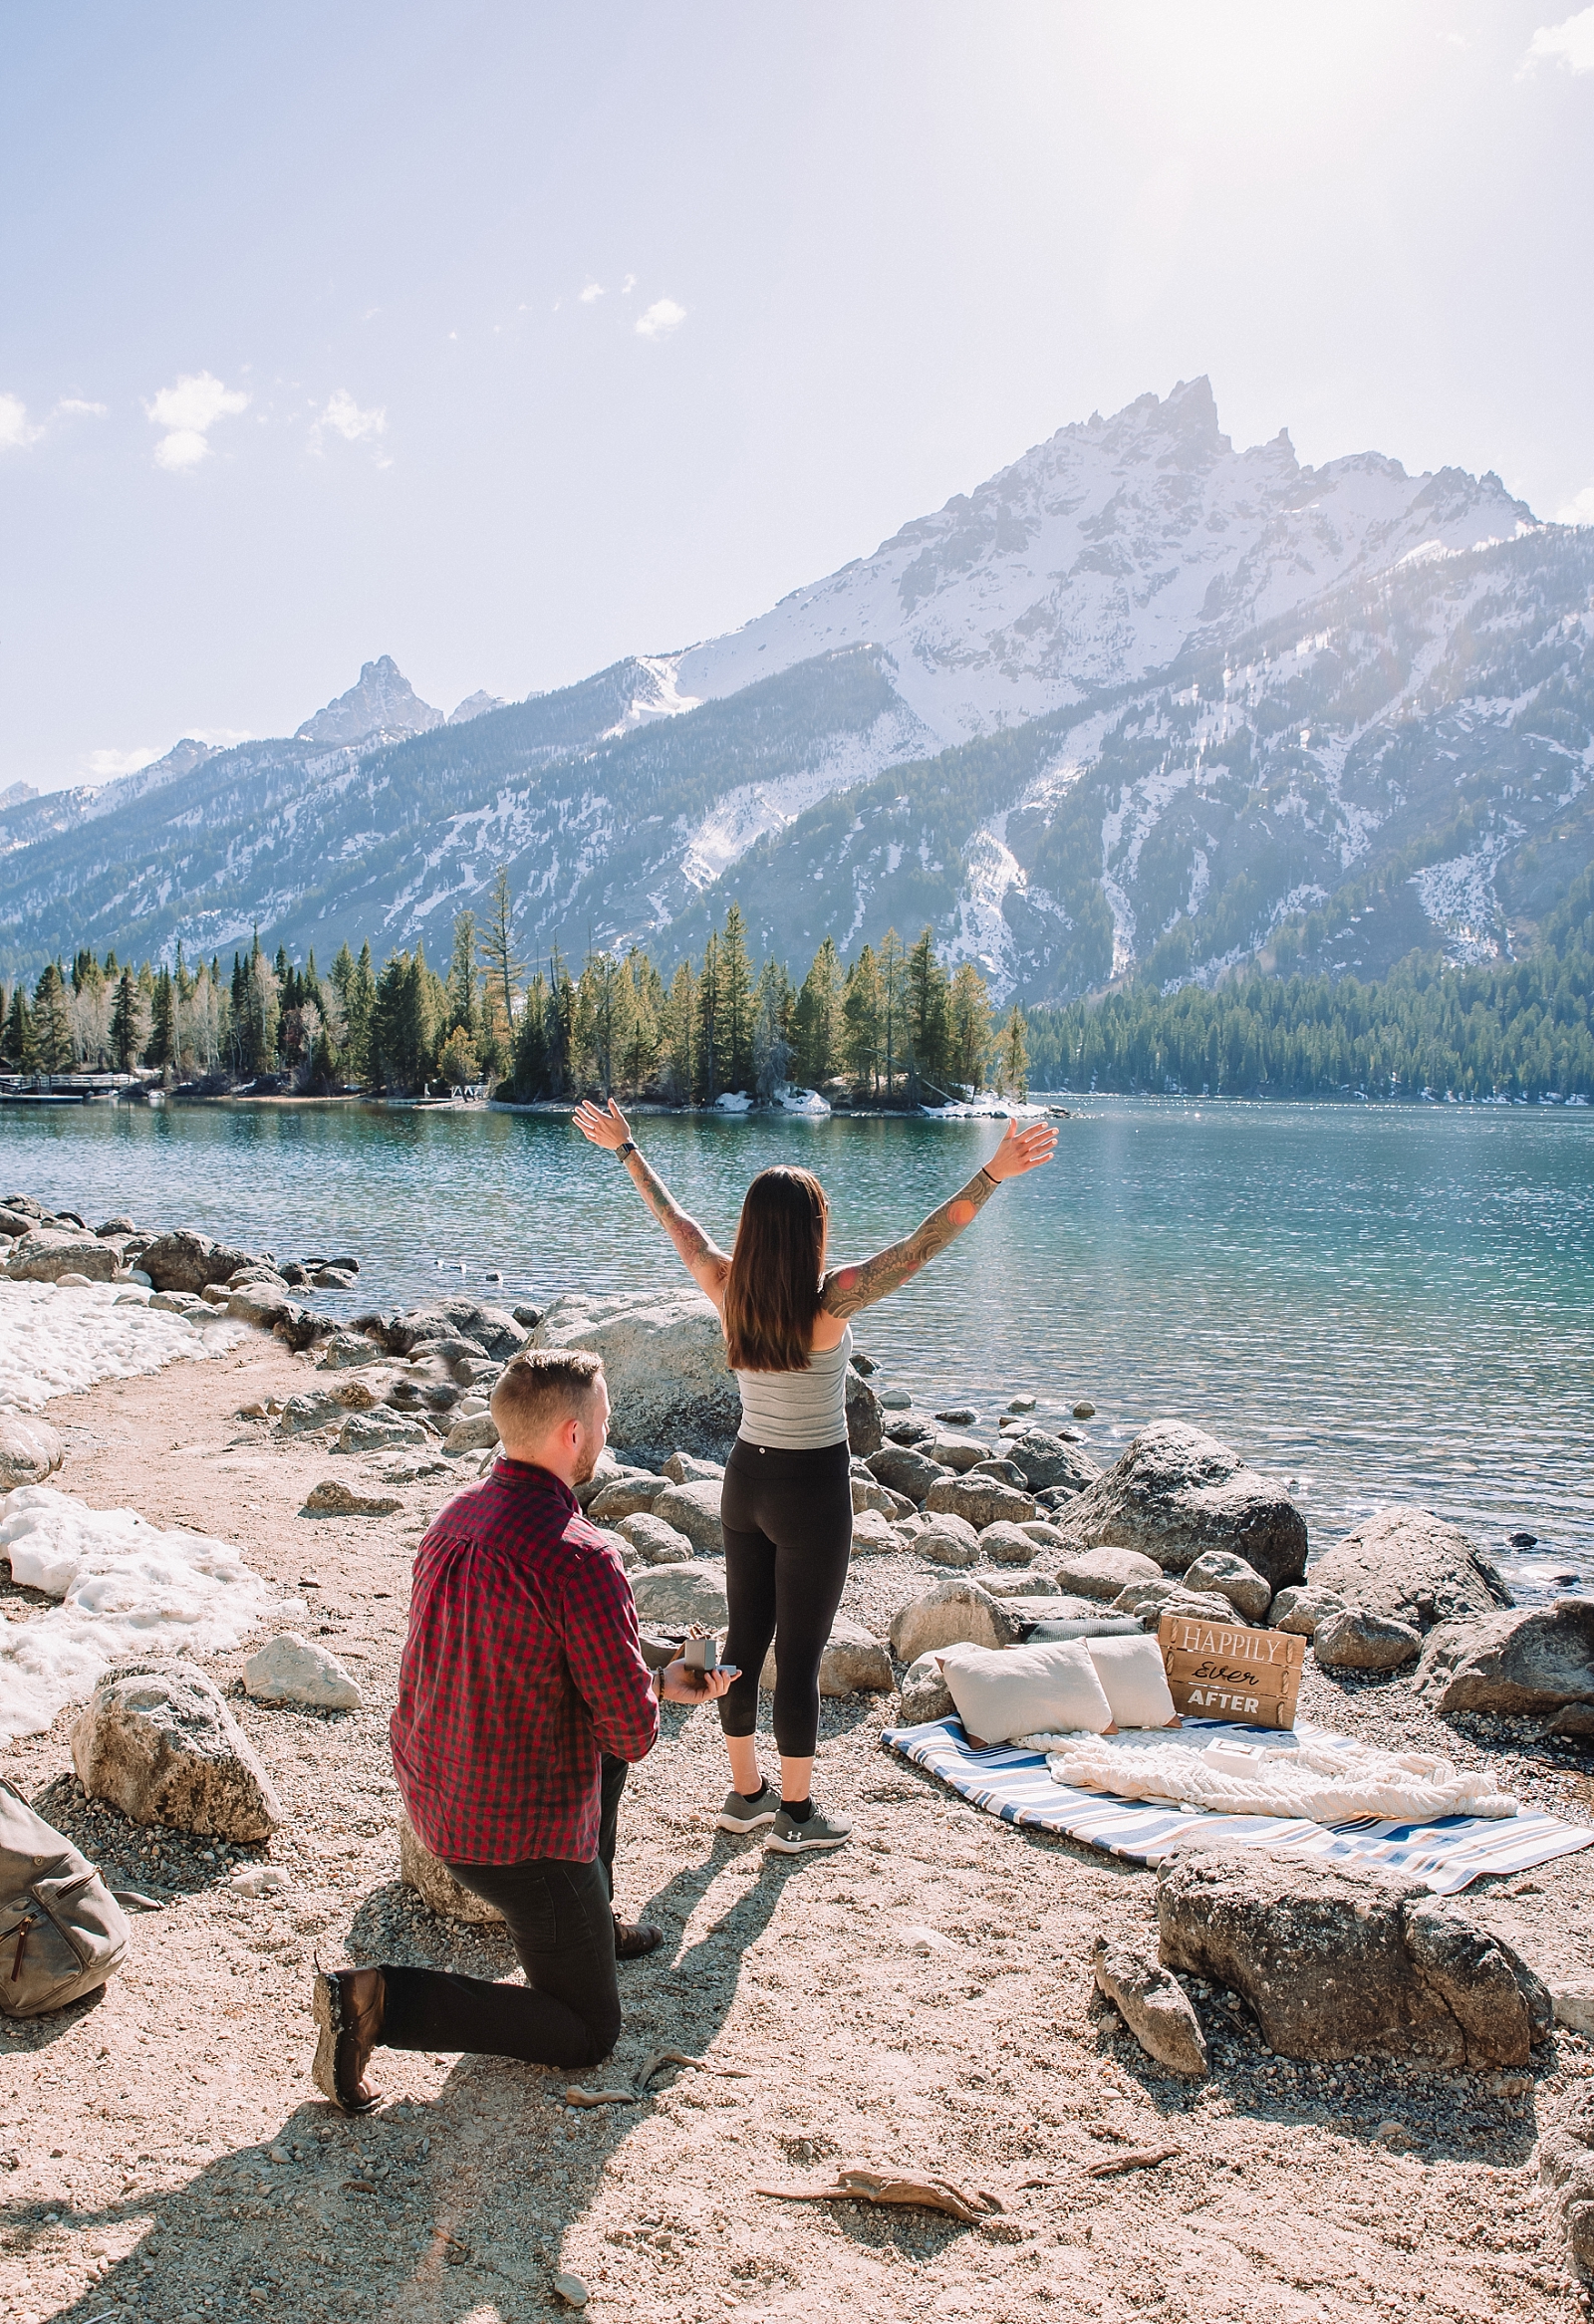 Man proposes to girlfriend in jenny lake proposal